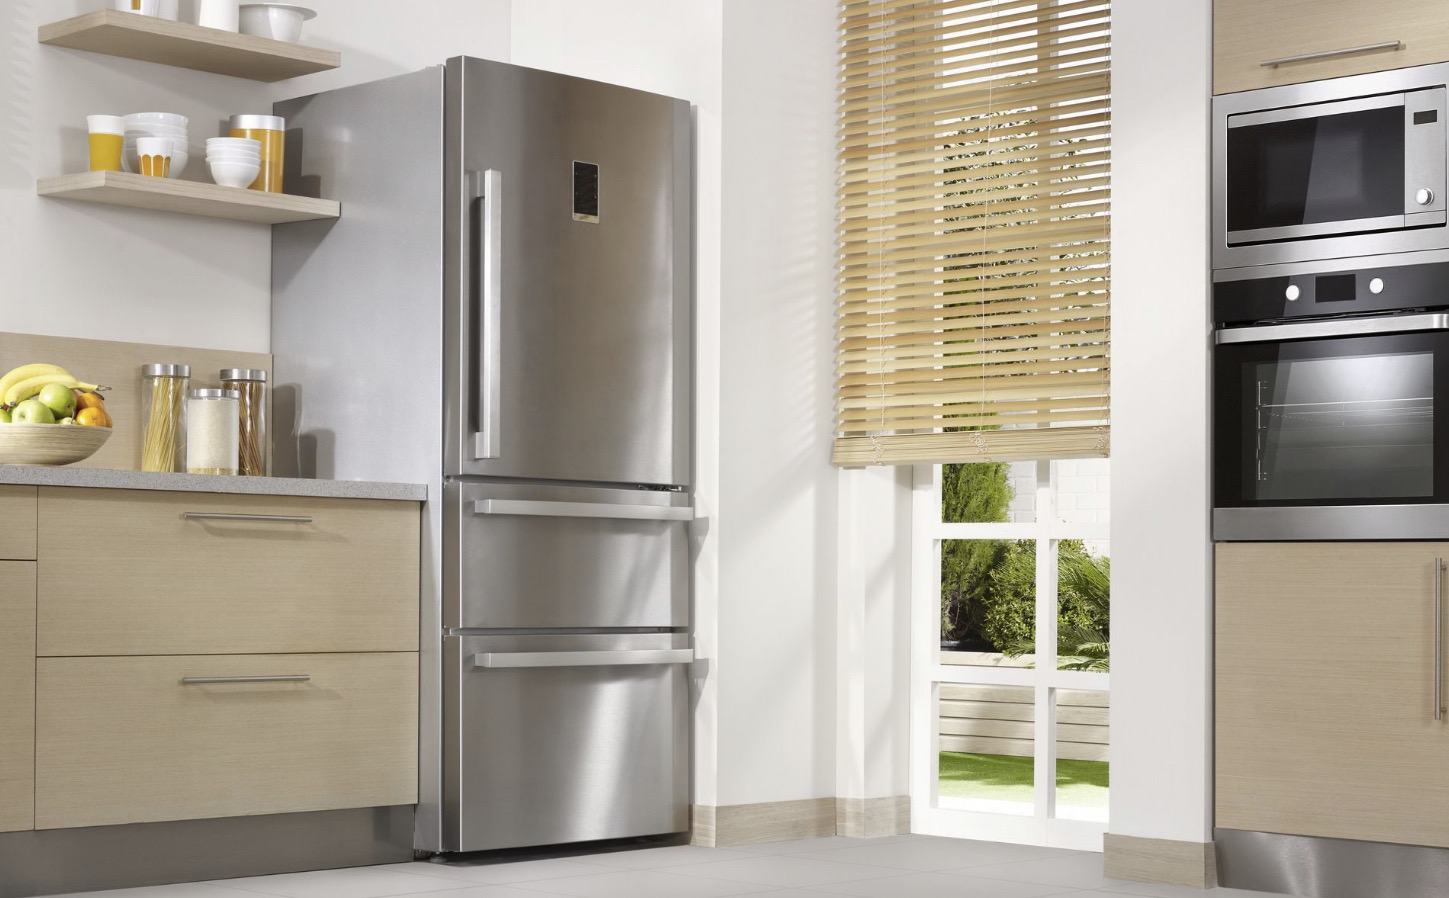 Apartment Size Refrigerator With Freezer